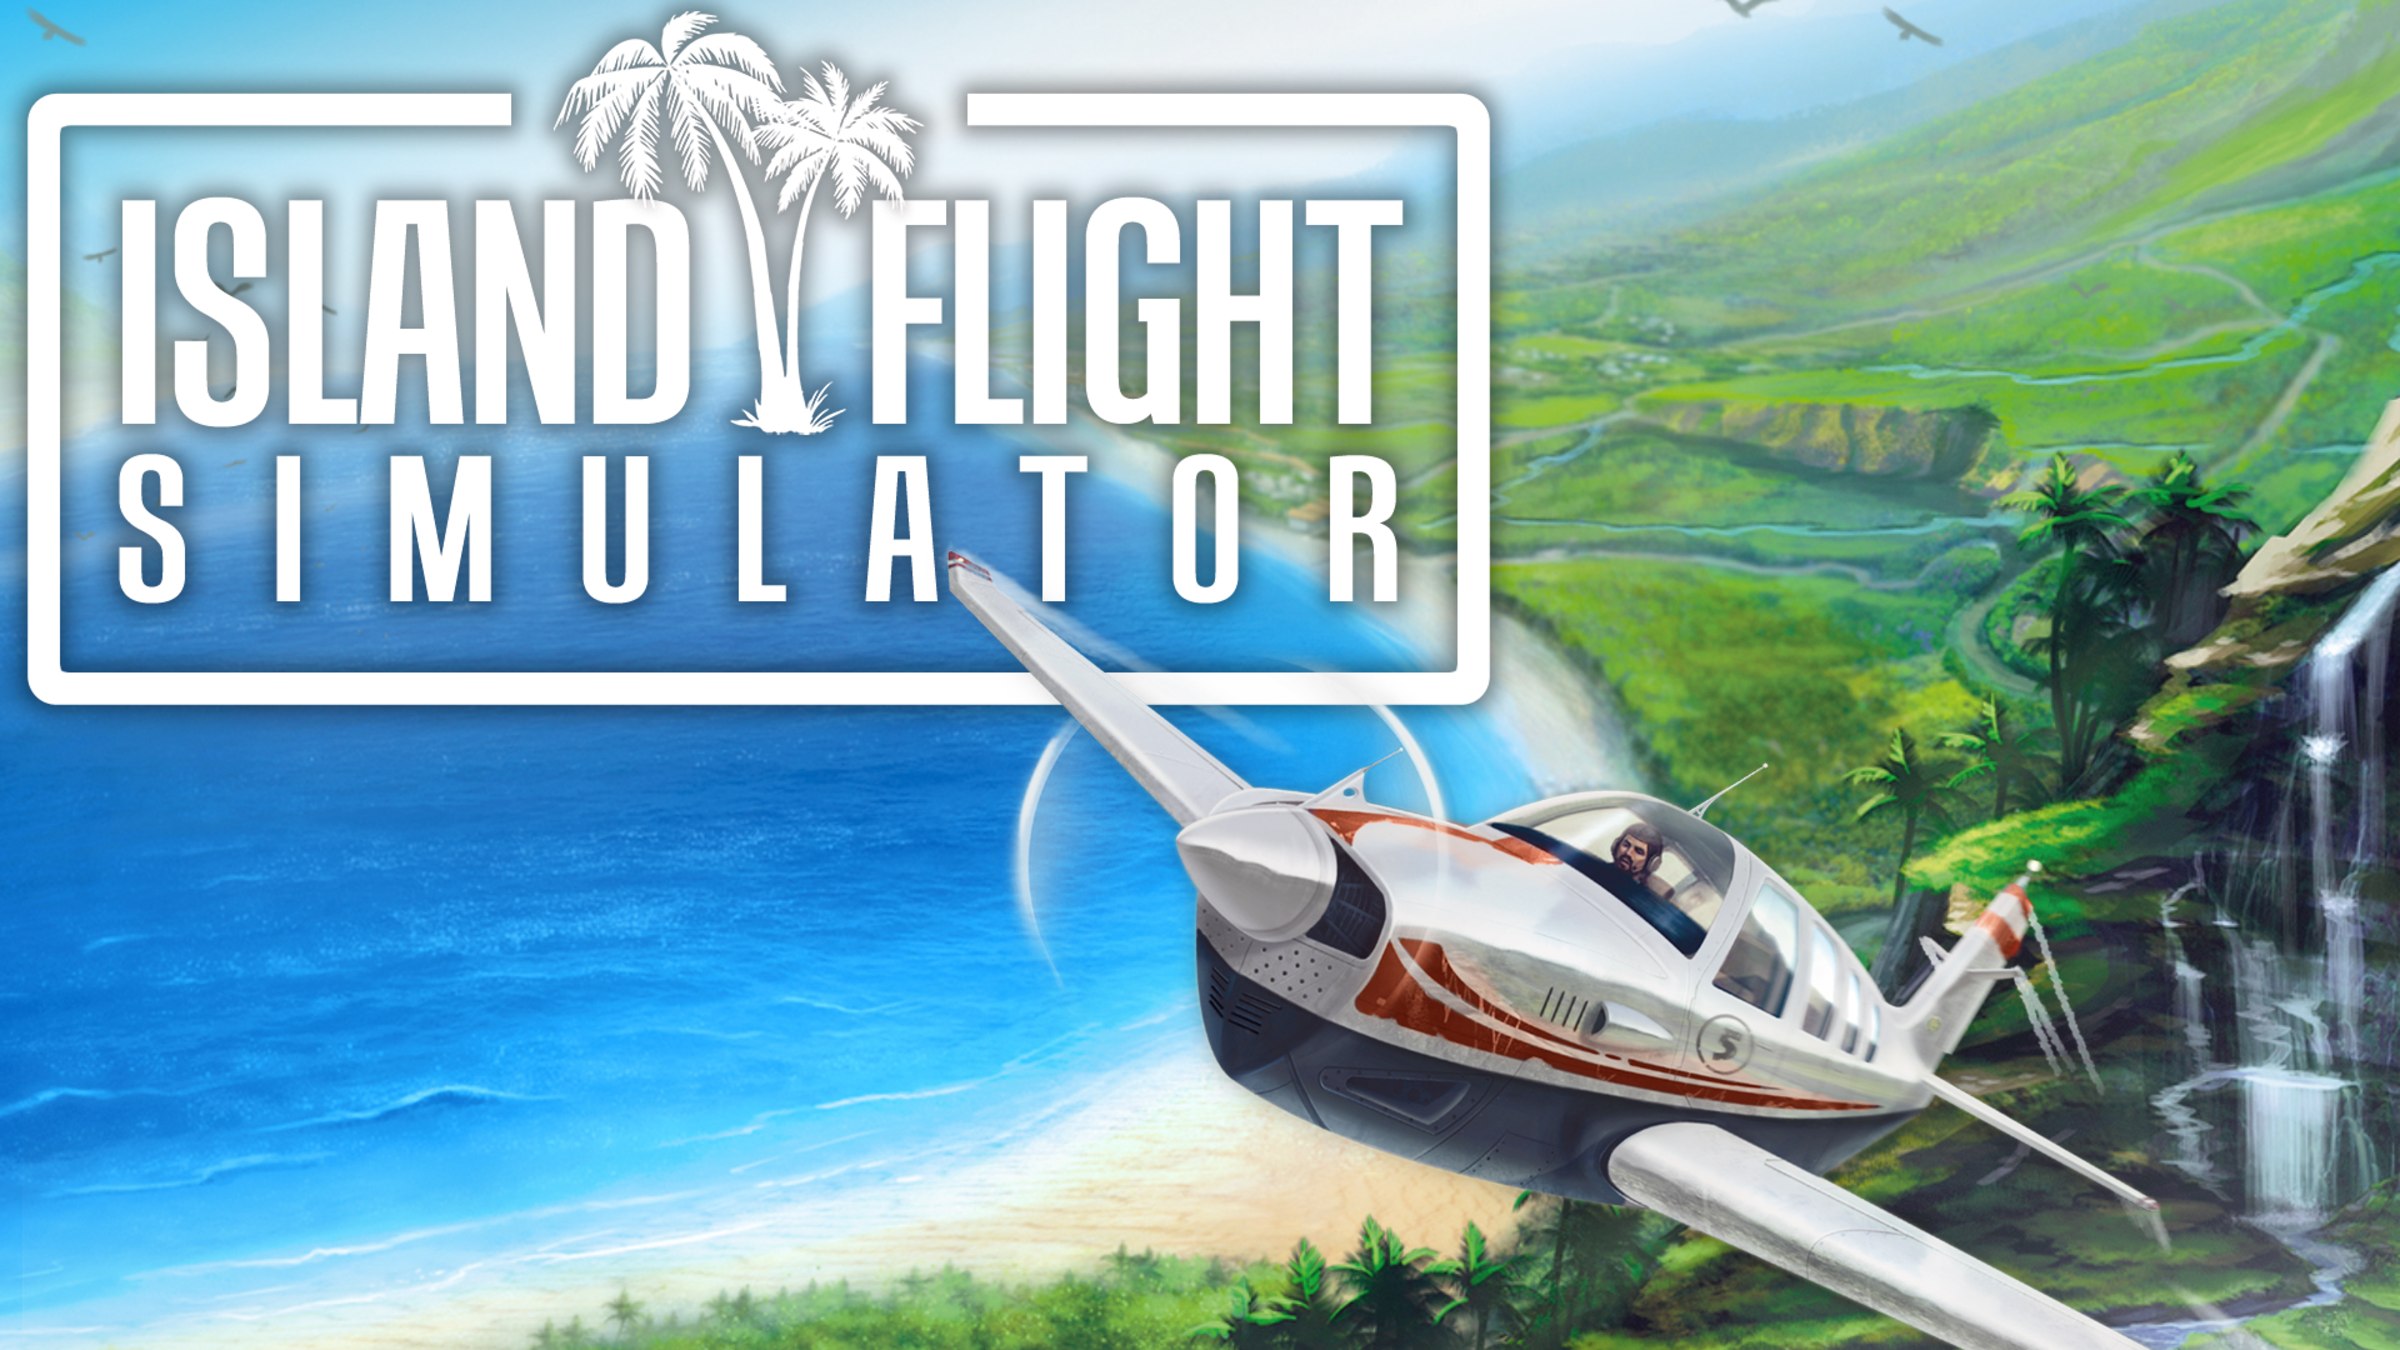 Take Off – The Flight Simulator for Nintendo Switch - Nintendo Official Site